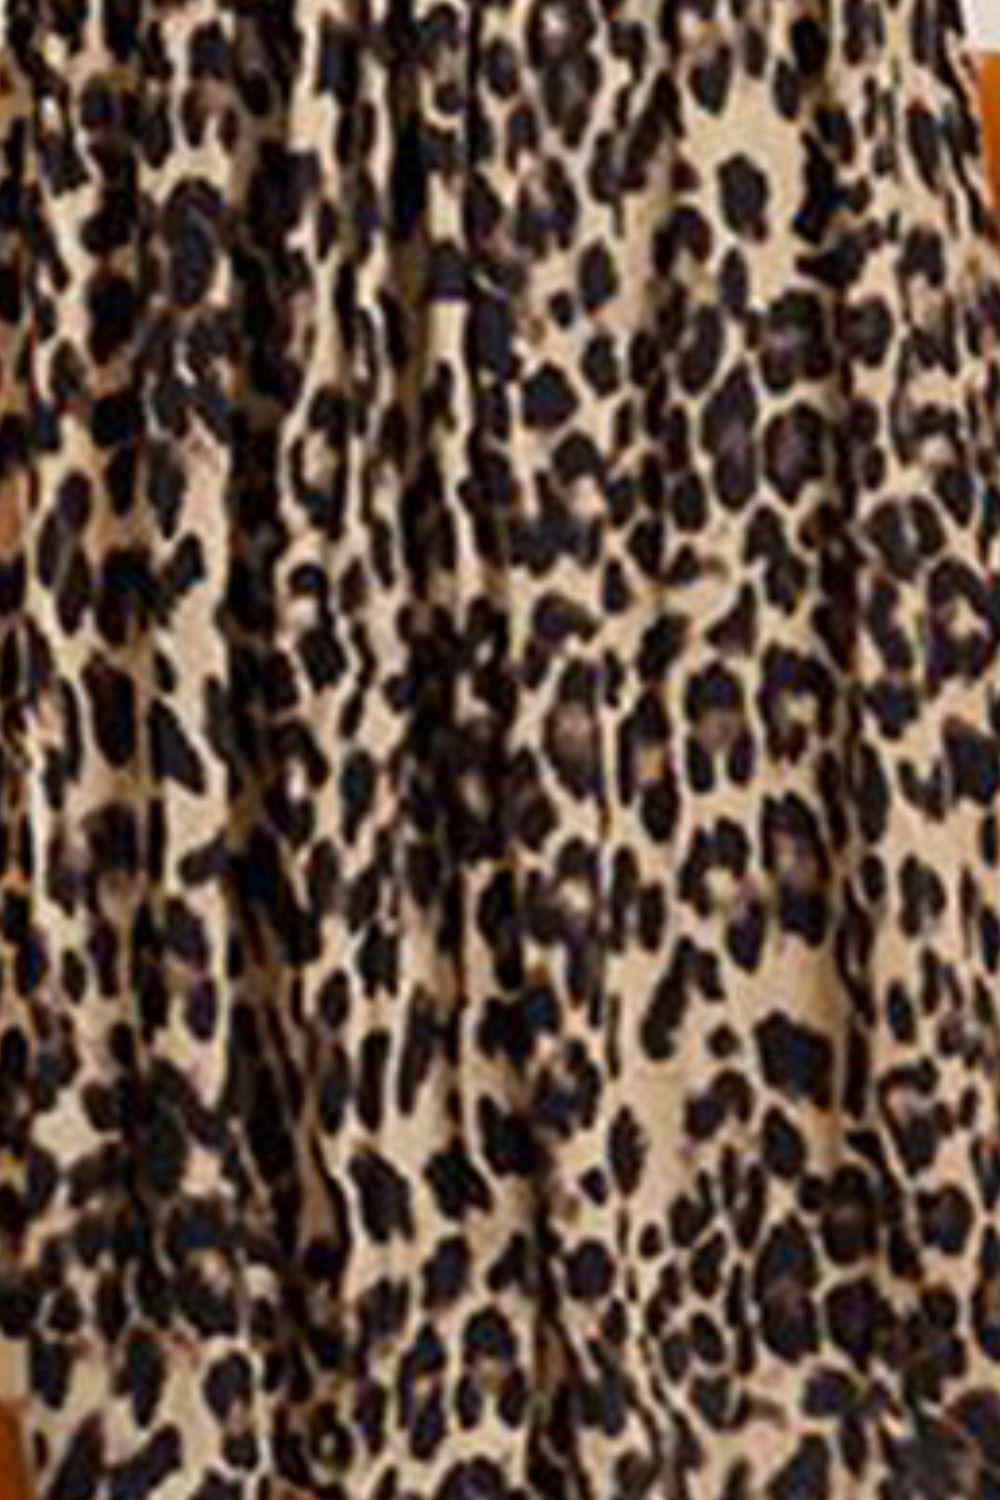 Plus Size Leopard Print Midi Skirt BLUE ZONE PLANET